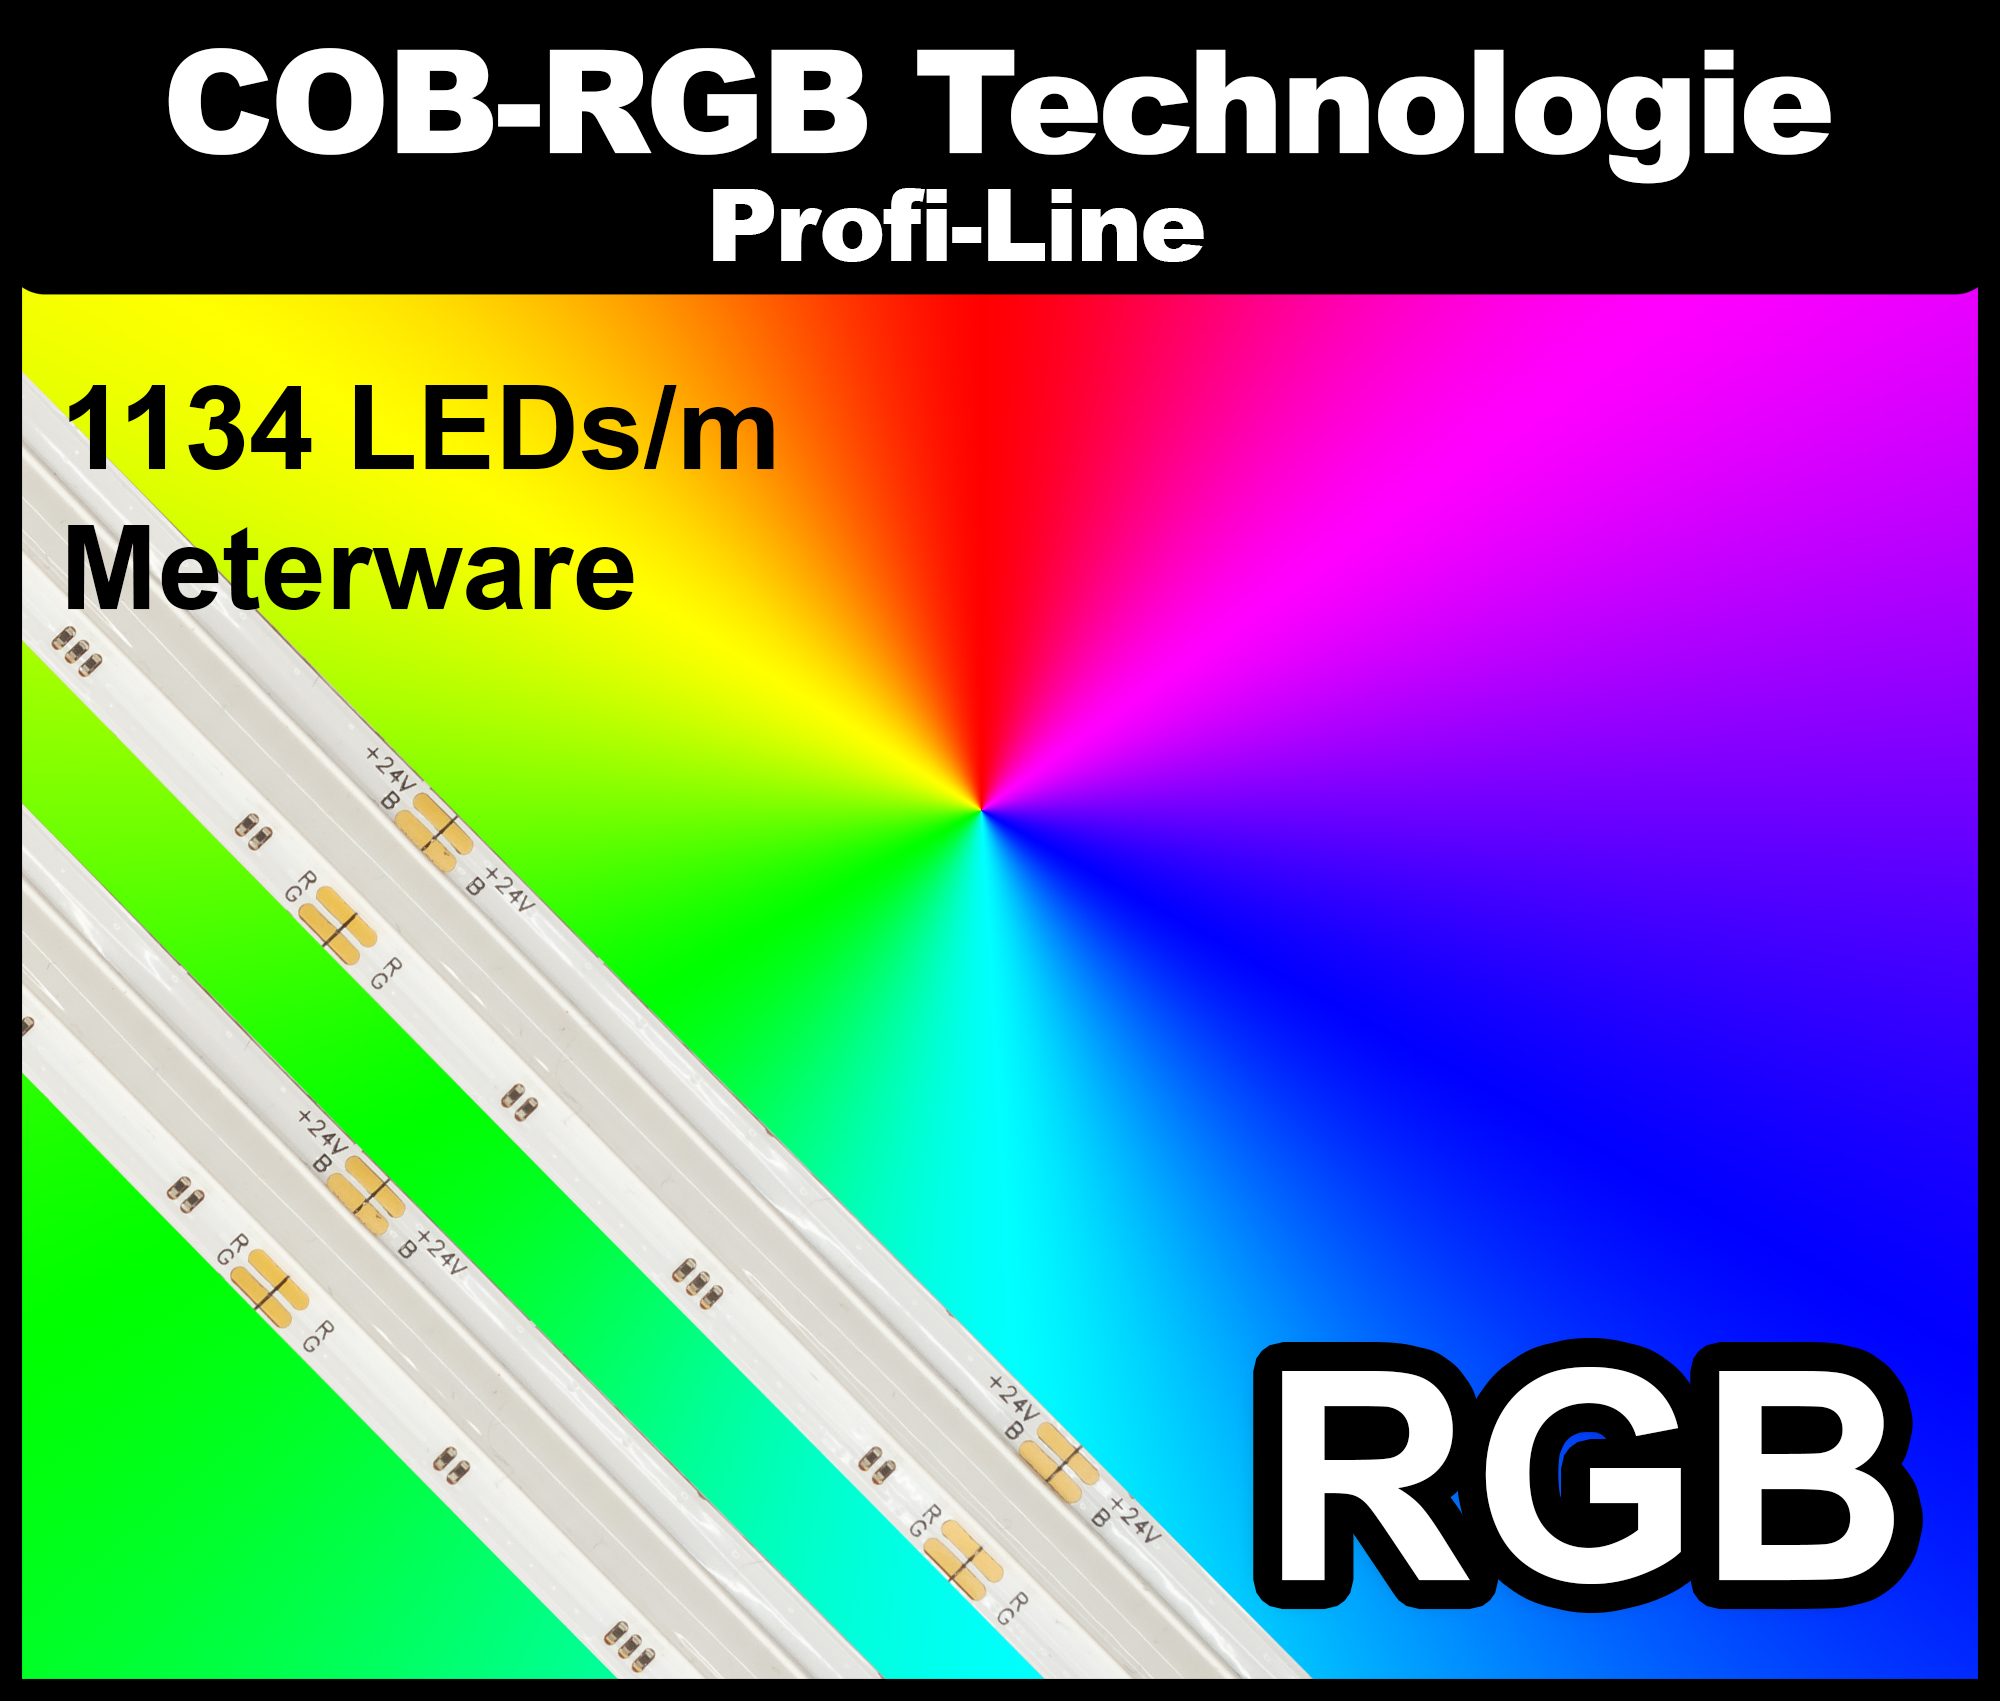 IP67 Silikonschlauch LED Stripes inkl. Zugband für 12mm Stripes